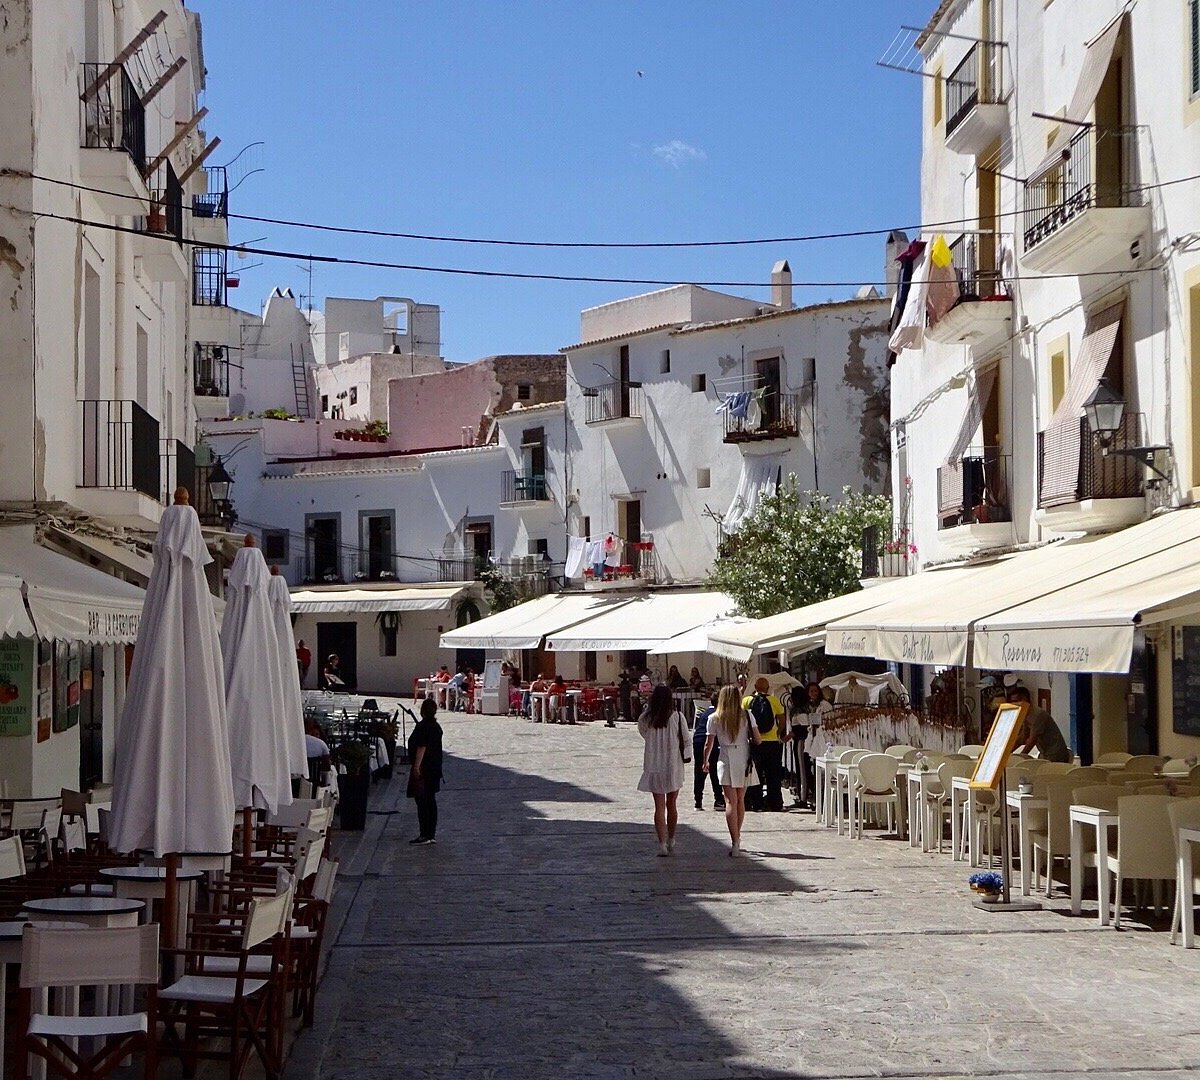 Resort guide for Ibiza Town (Eivissa)